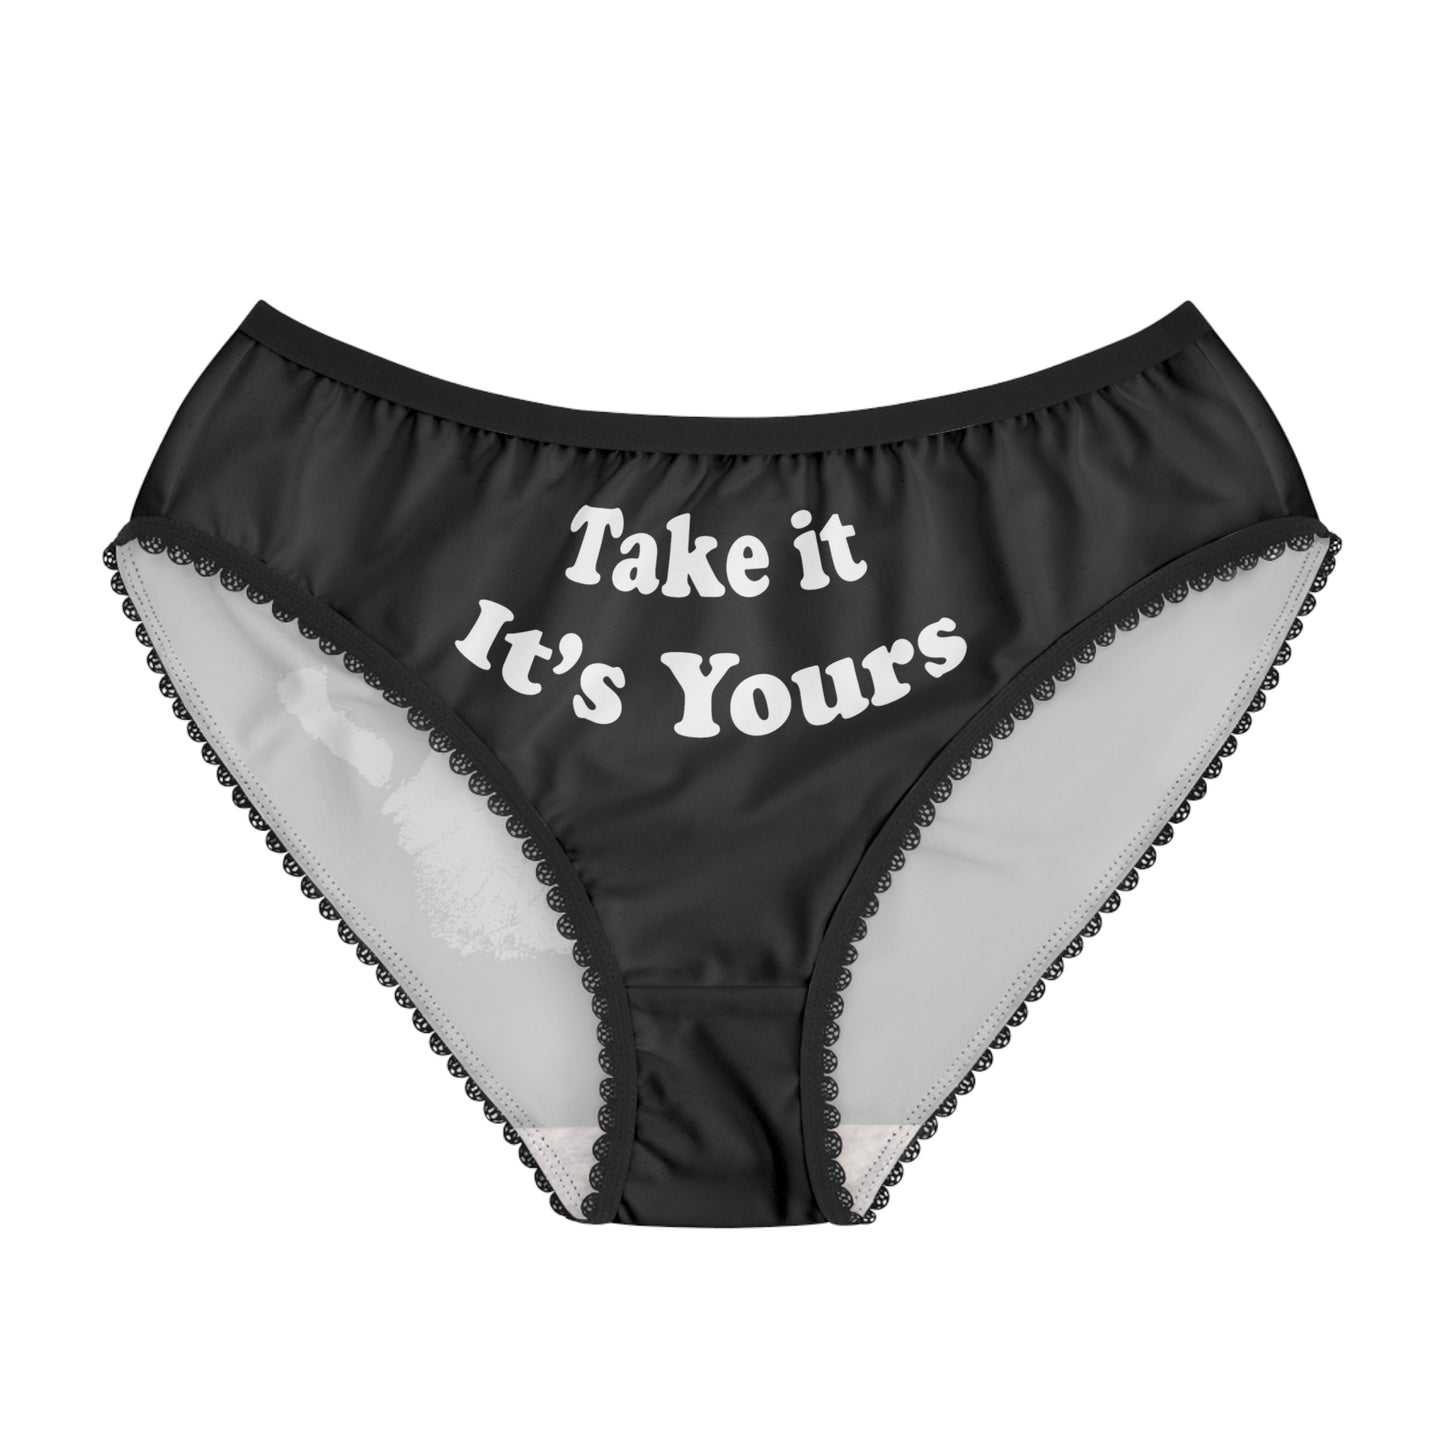 Take It Its Yours Panties, Hand print Panties Underwear, Submissive Panties, Women's Briefs